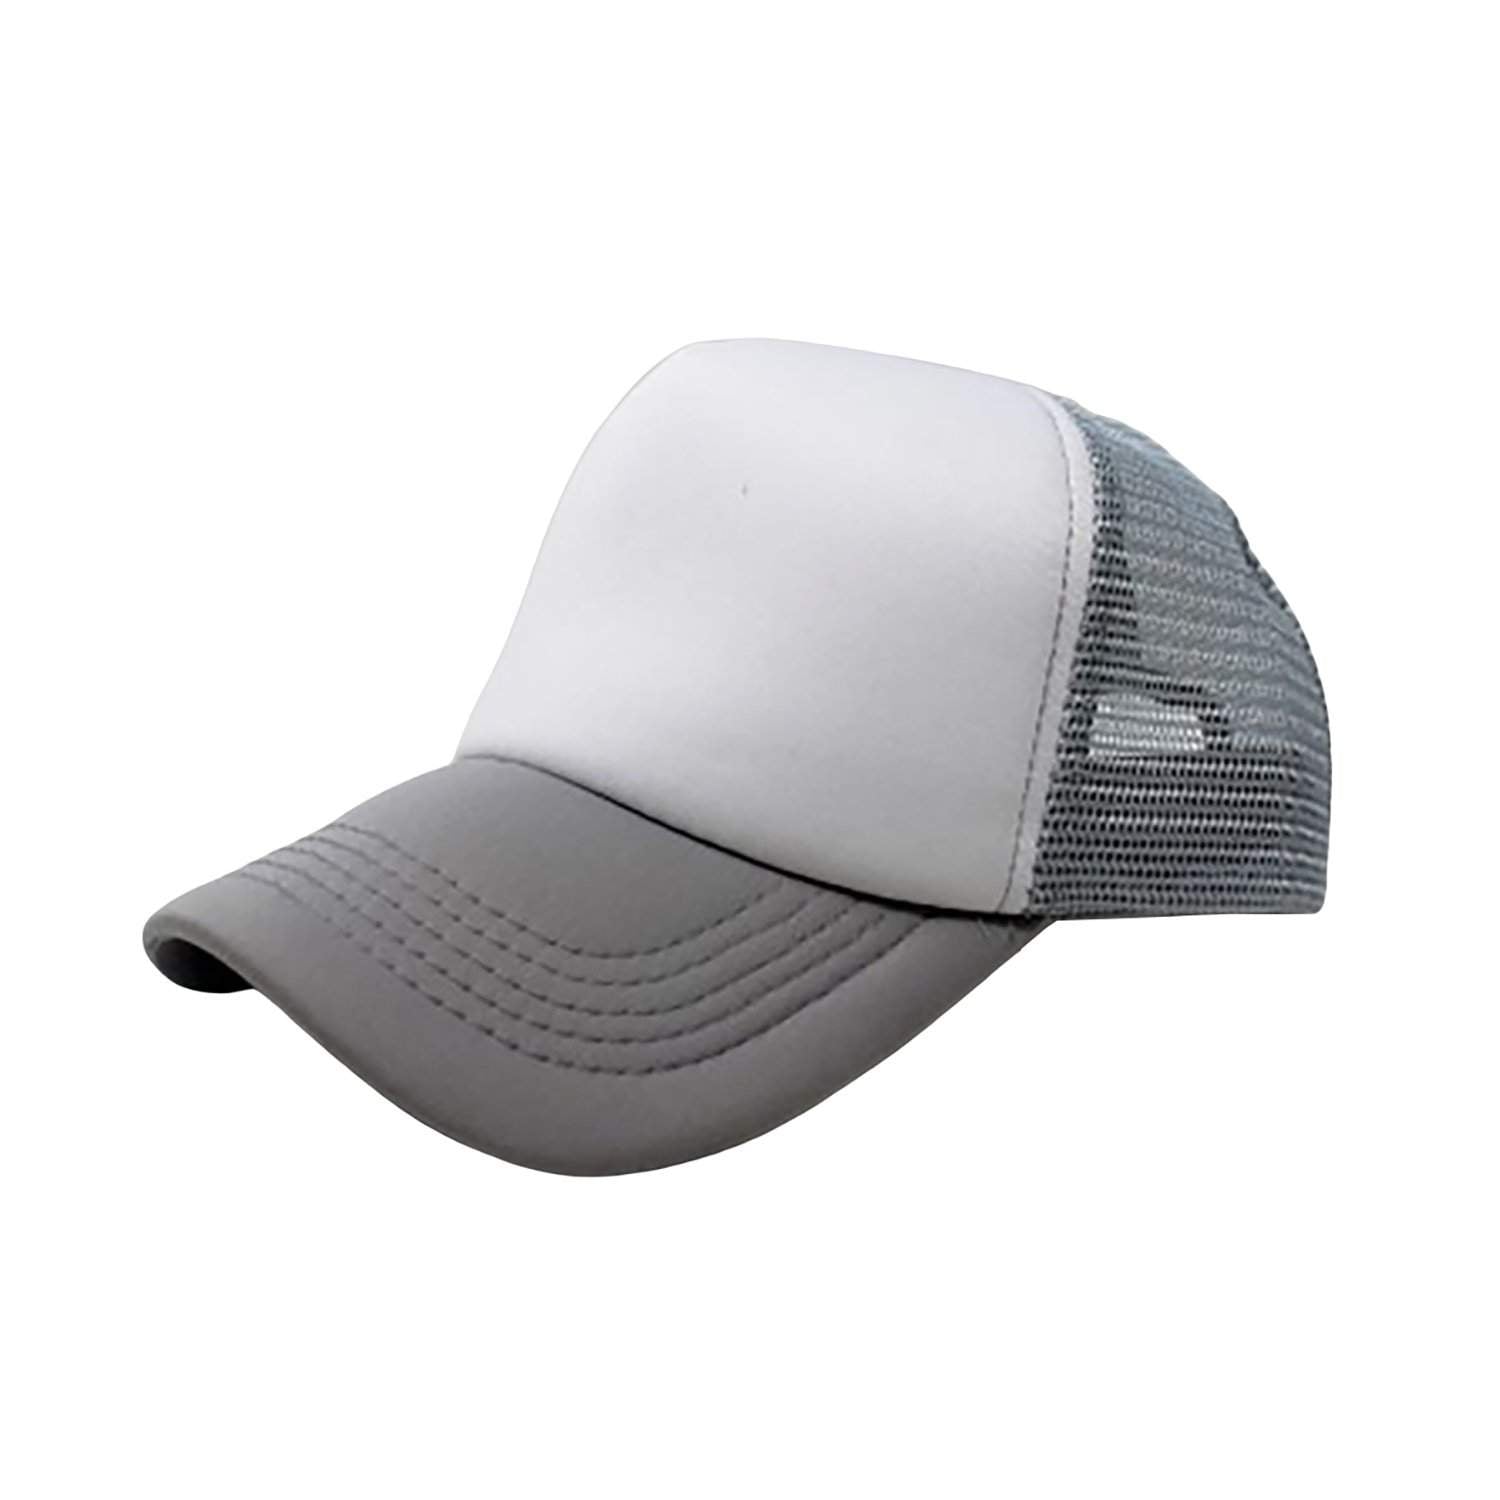 Pack of 4 Trucker Hat Cap - Bulk Wholesale by